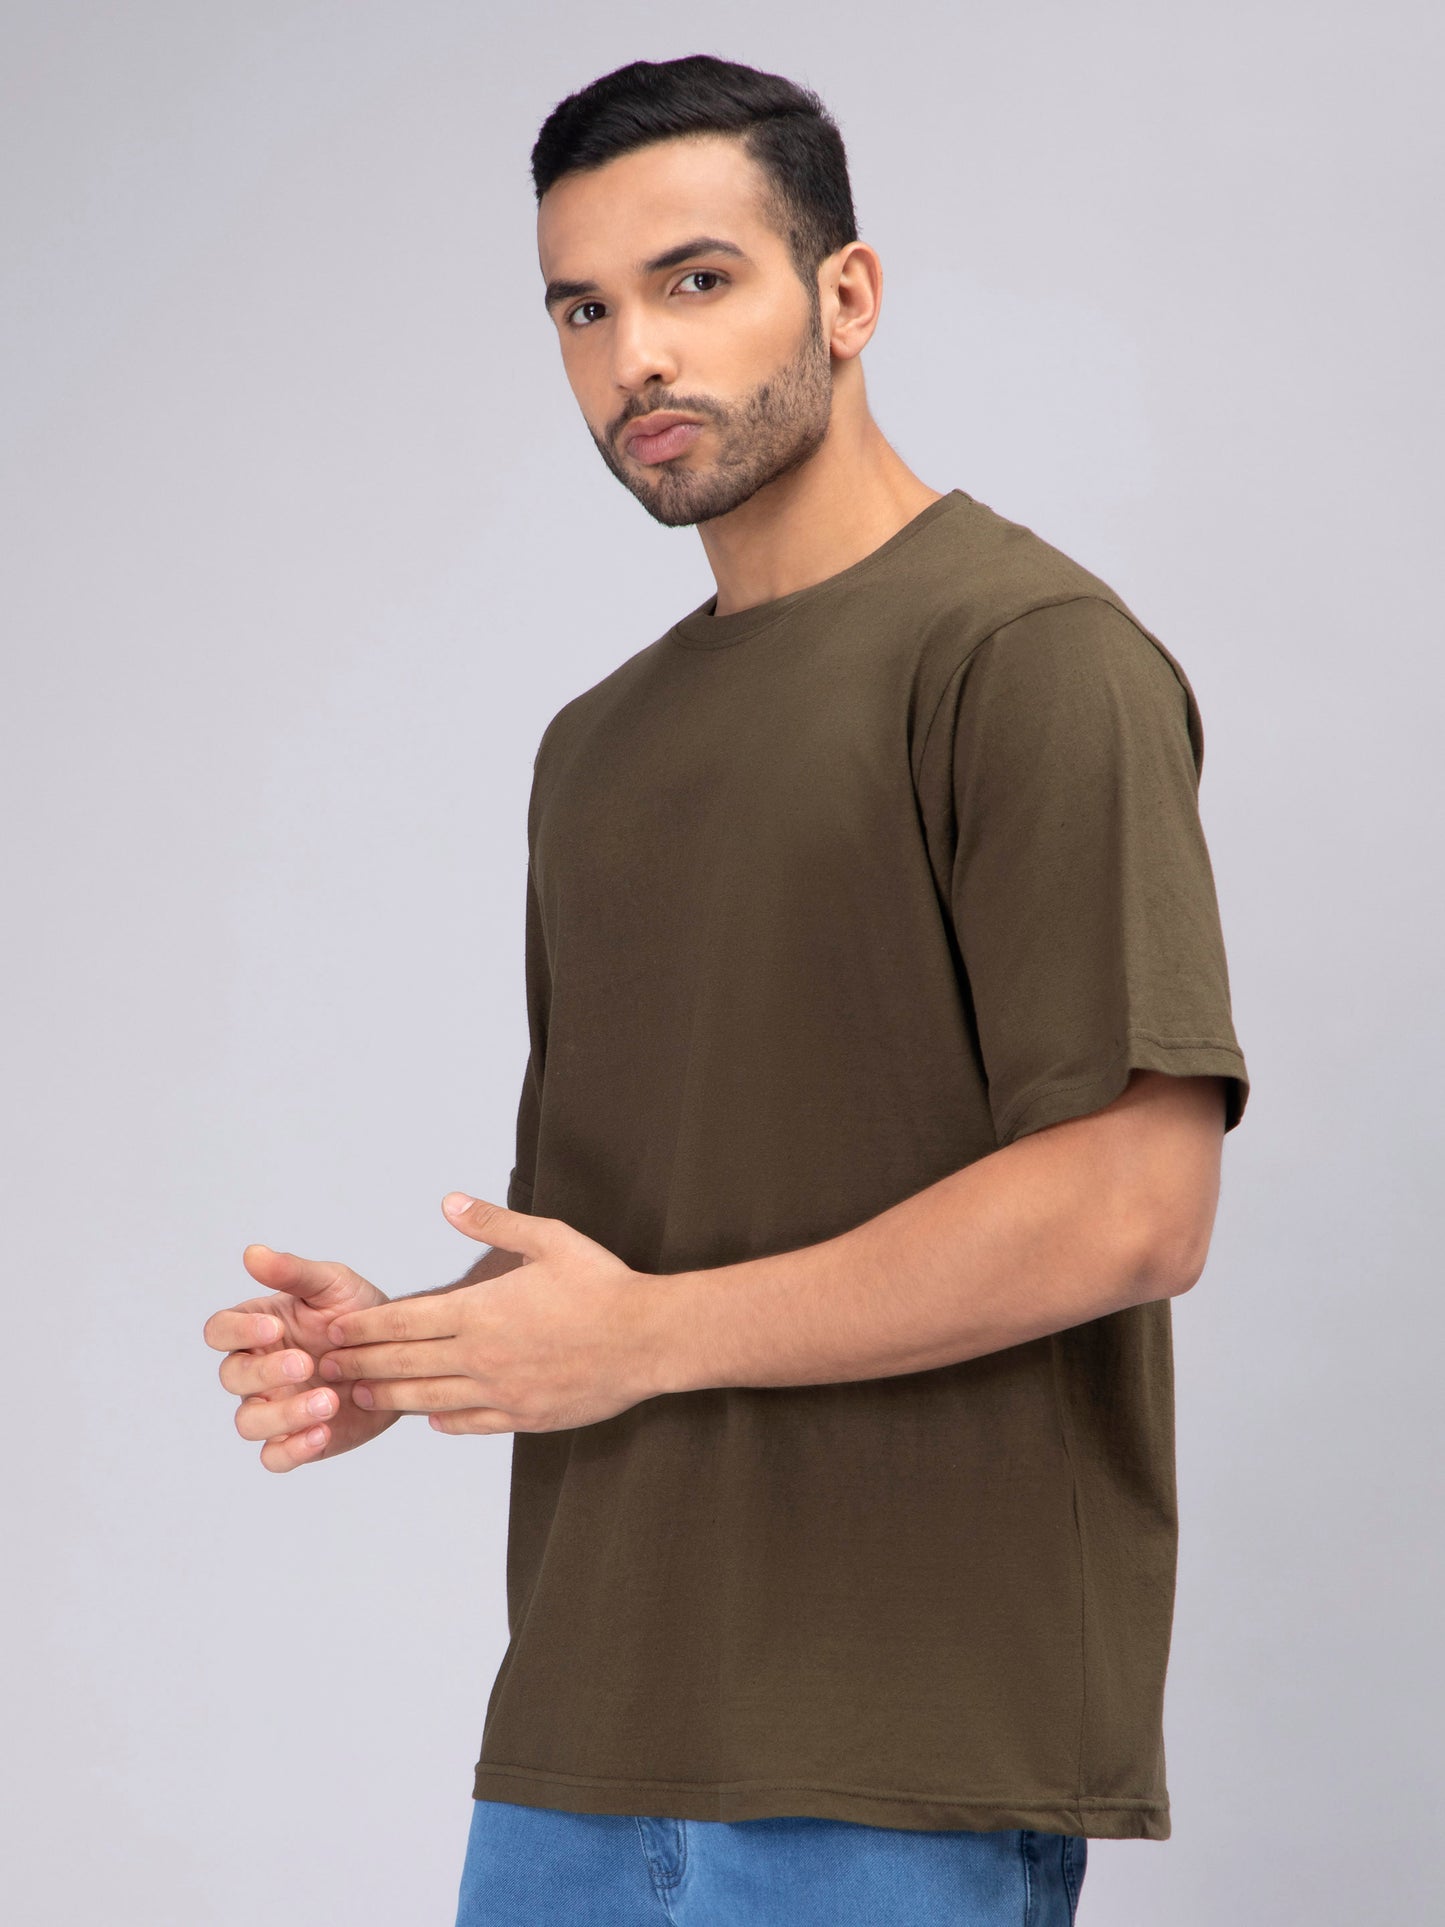 Solid Olive Green Oversized Men's Tshirt